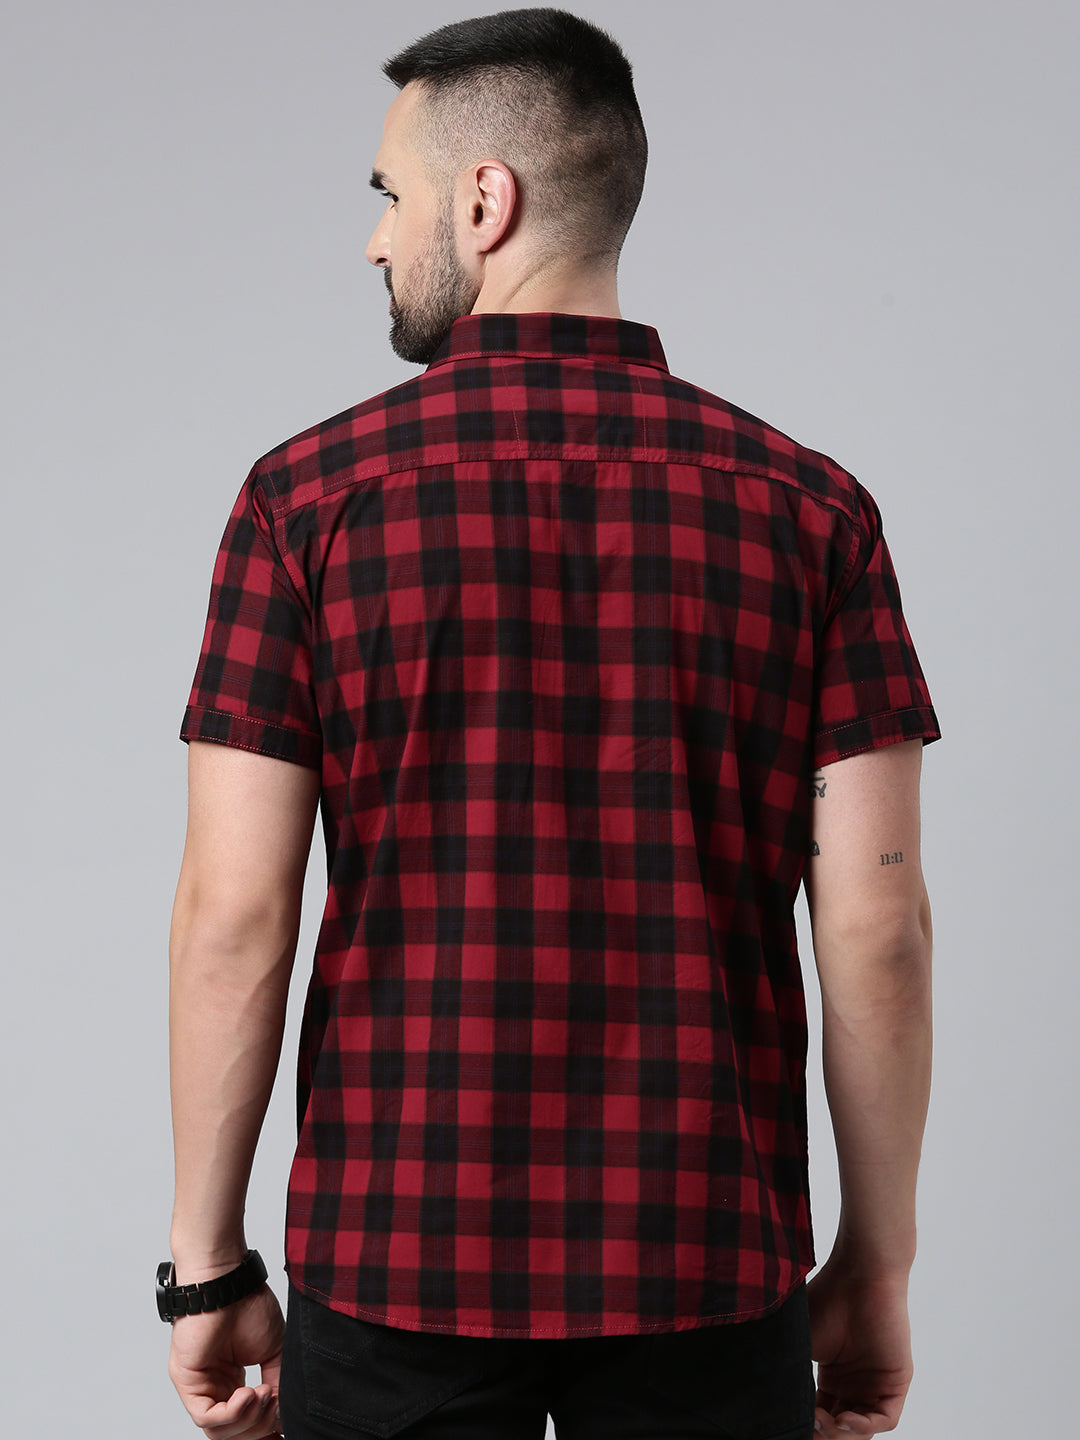 Half Sleeve Men's Casual Checkered Shirt - Maroon